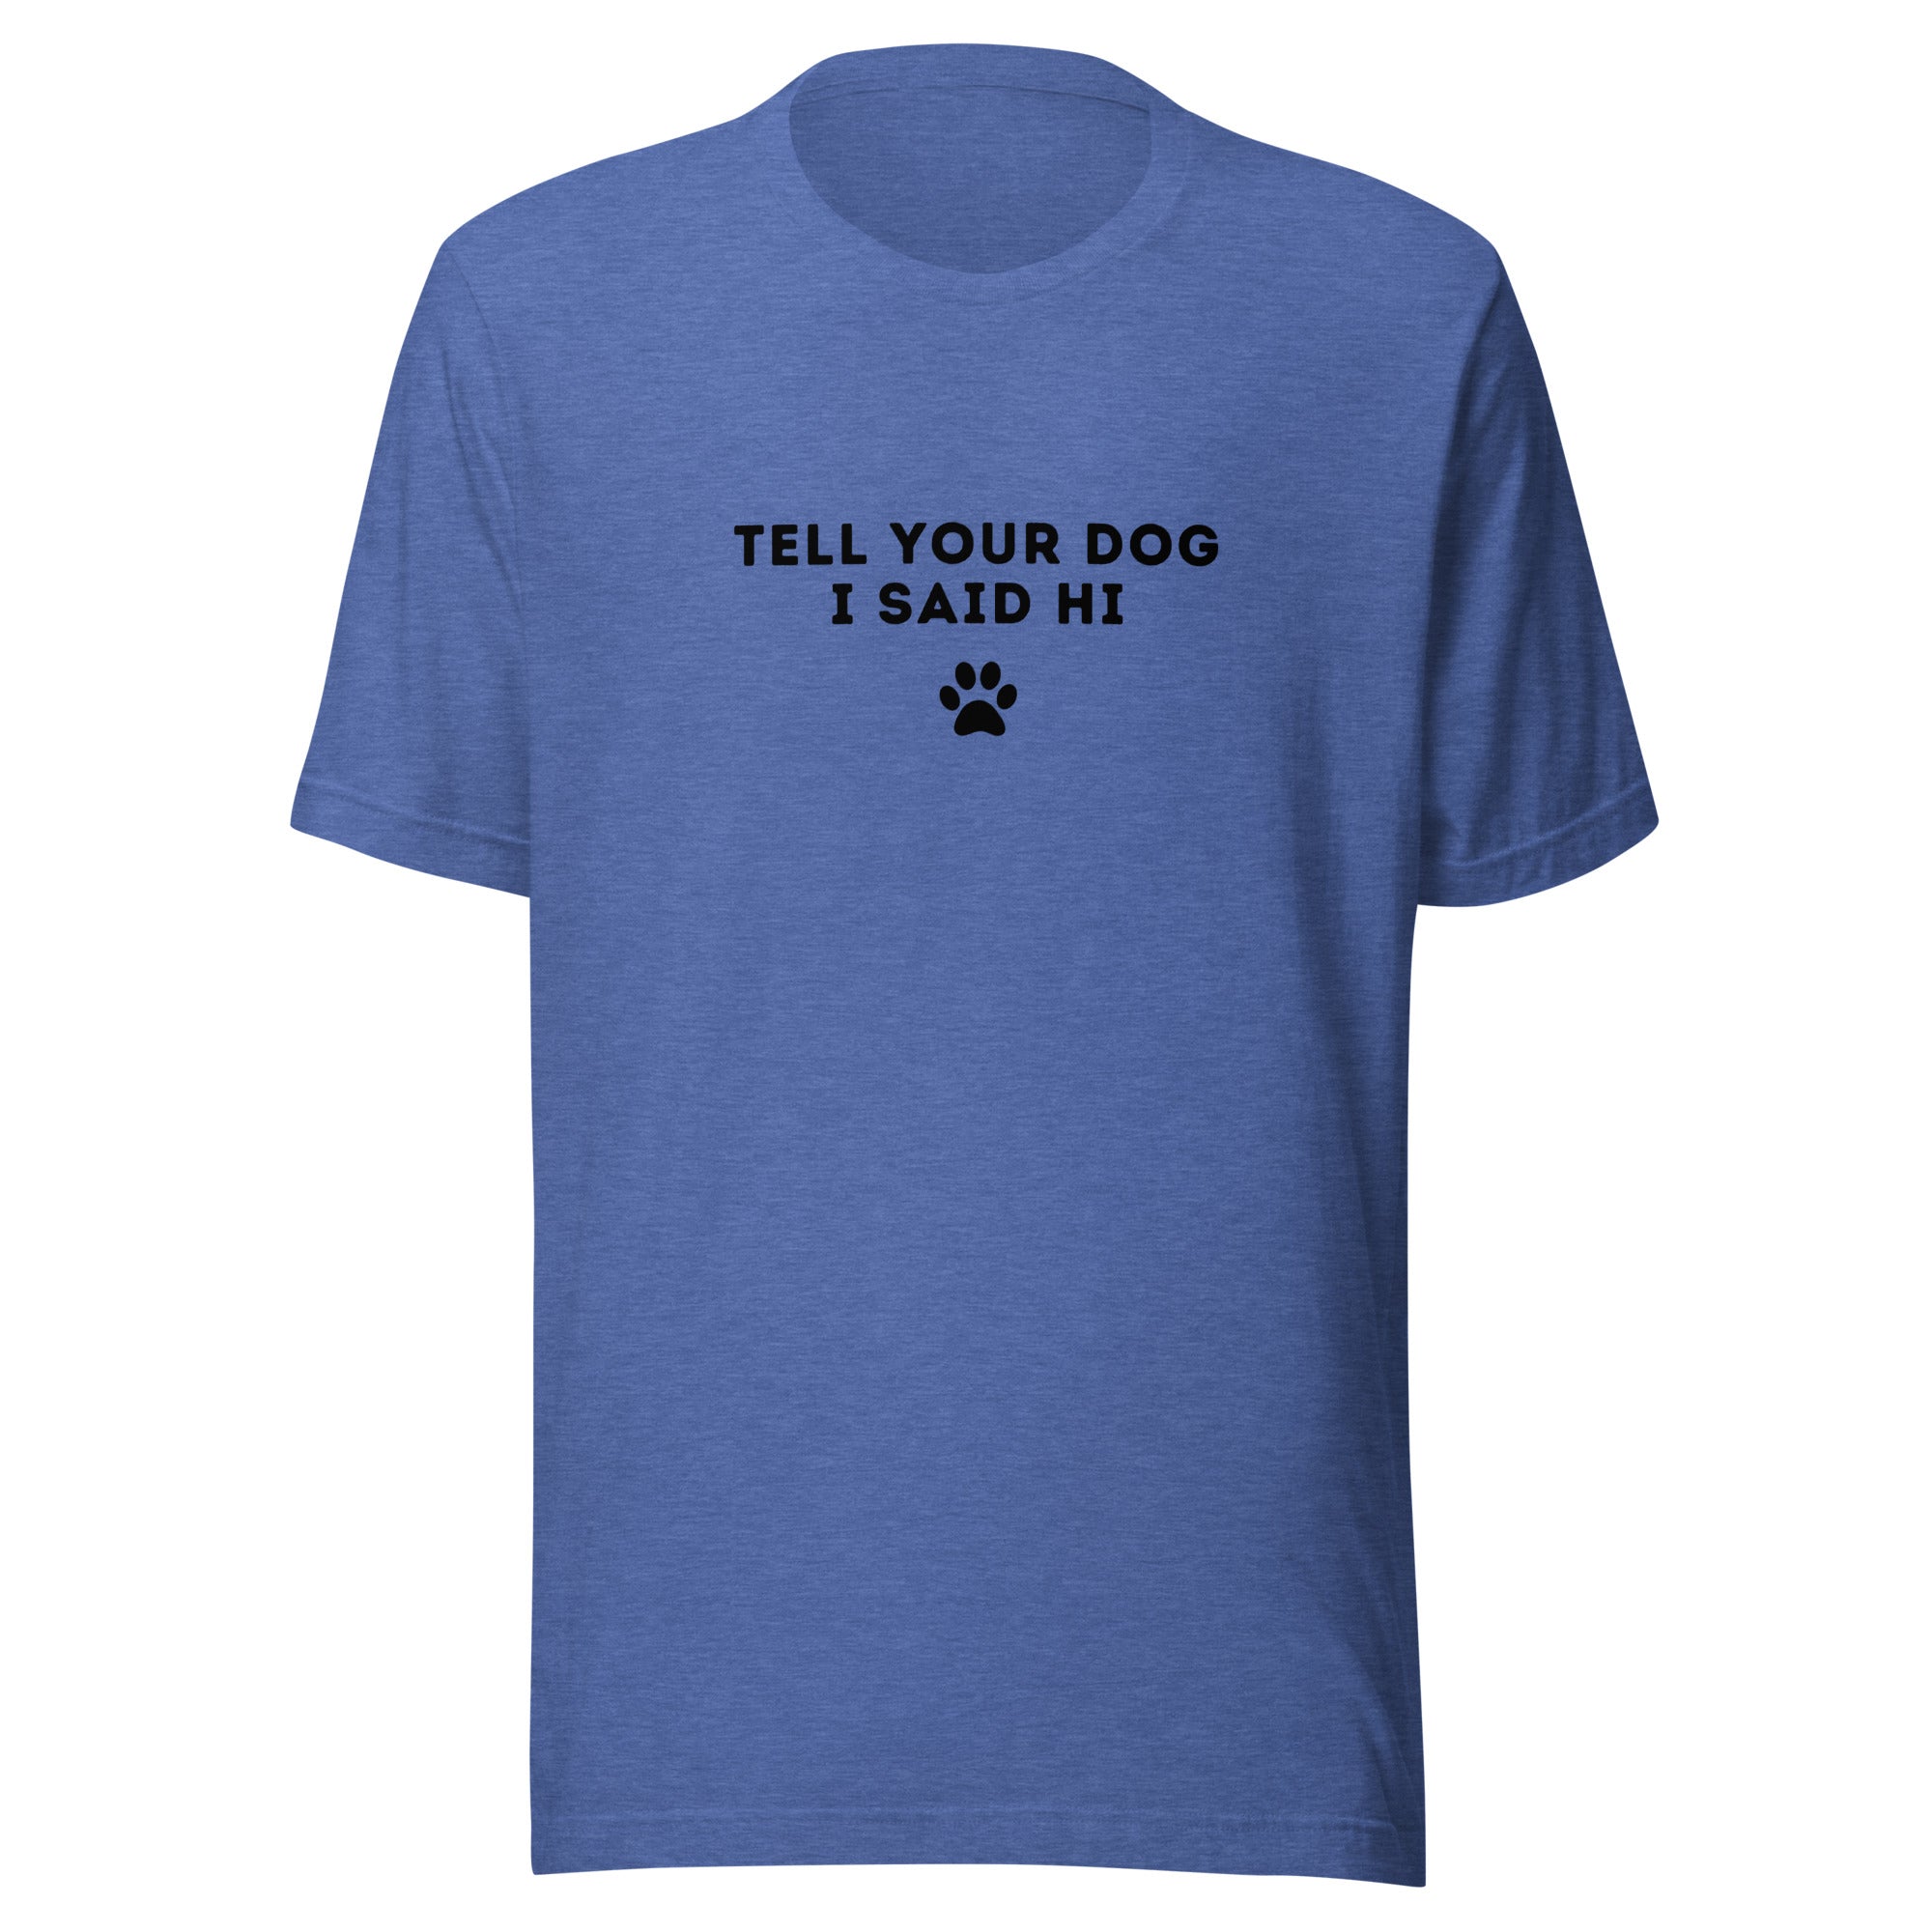 Tell Your Dog I Said Hi Women's T-Shirt